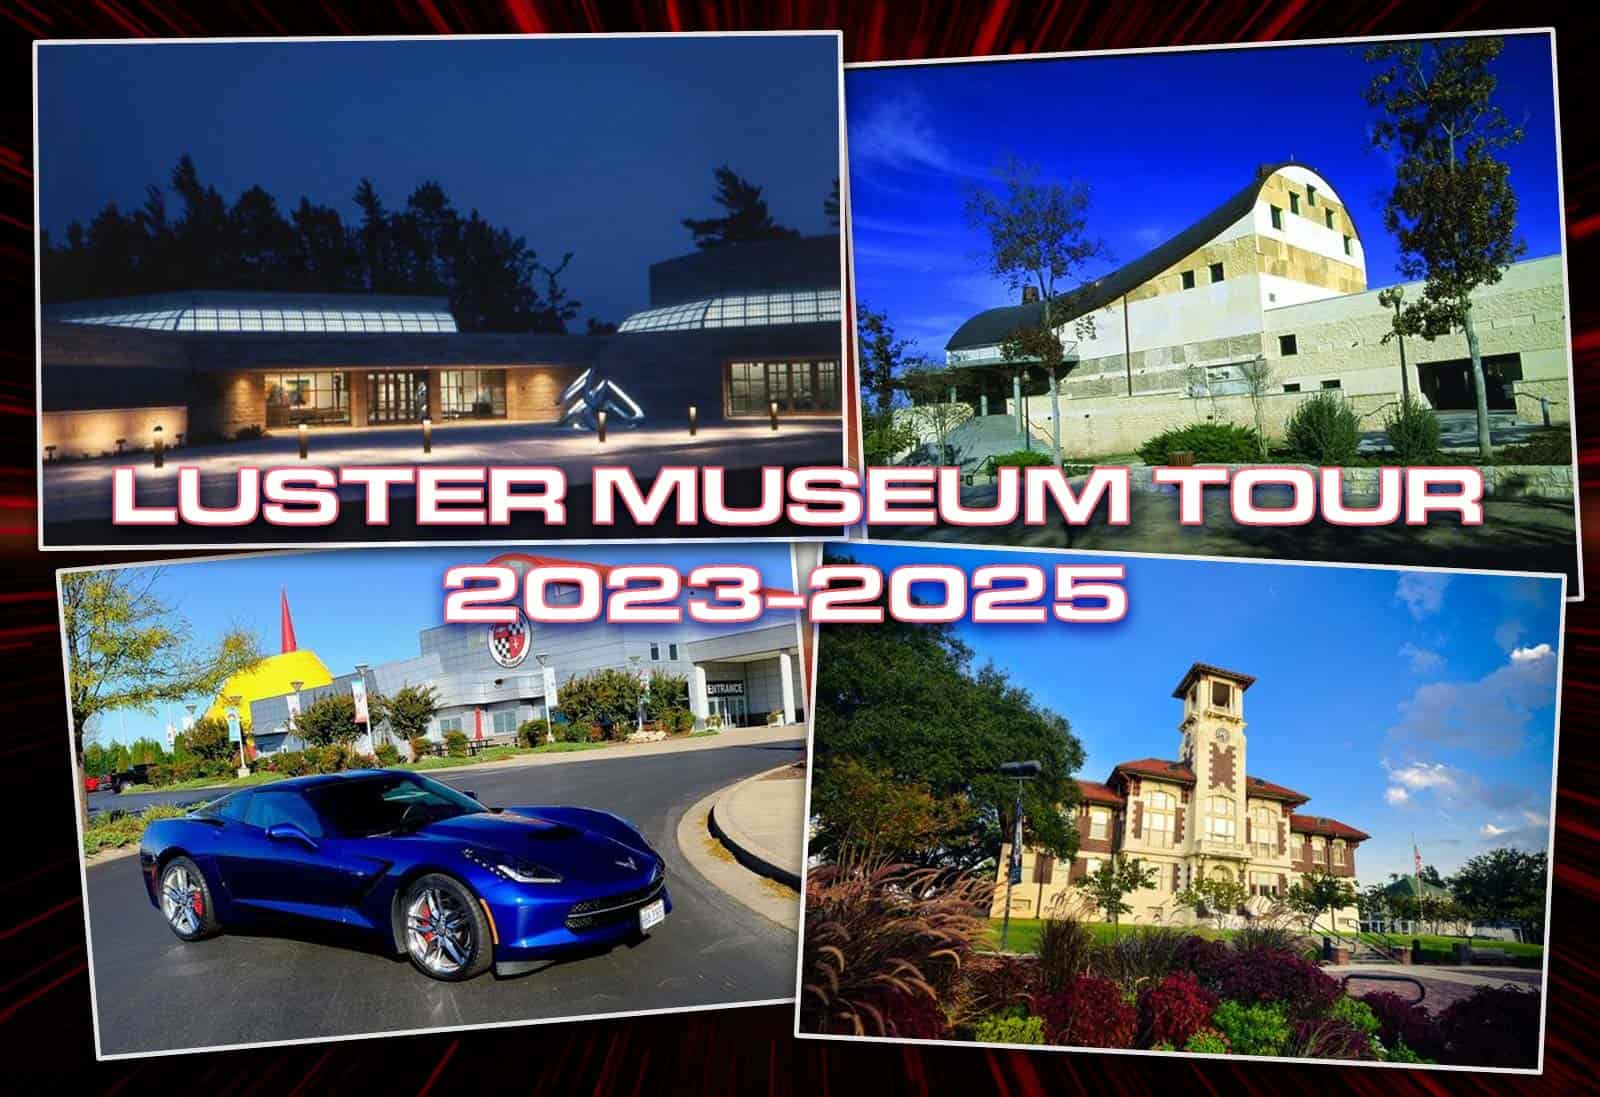 Luster Exhibition U.S. Museum Tour 2023-2025